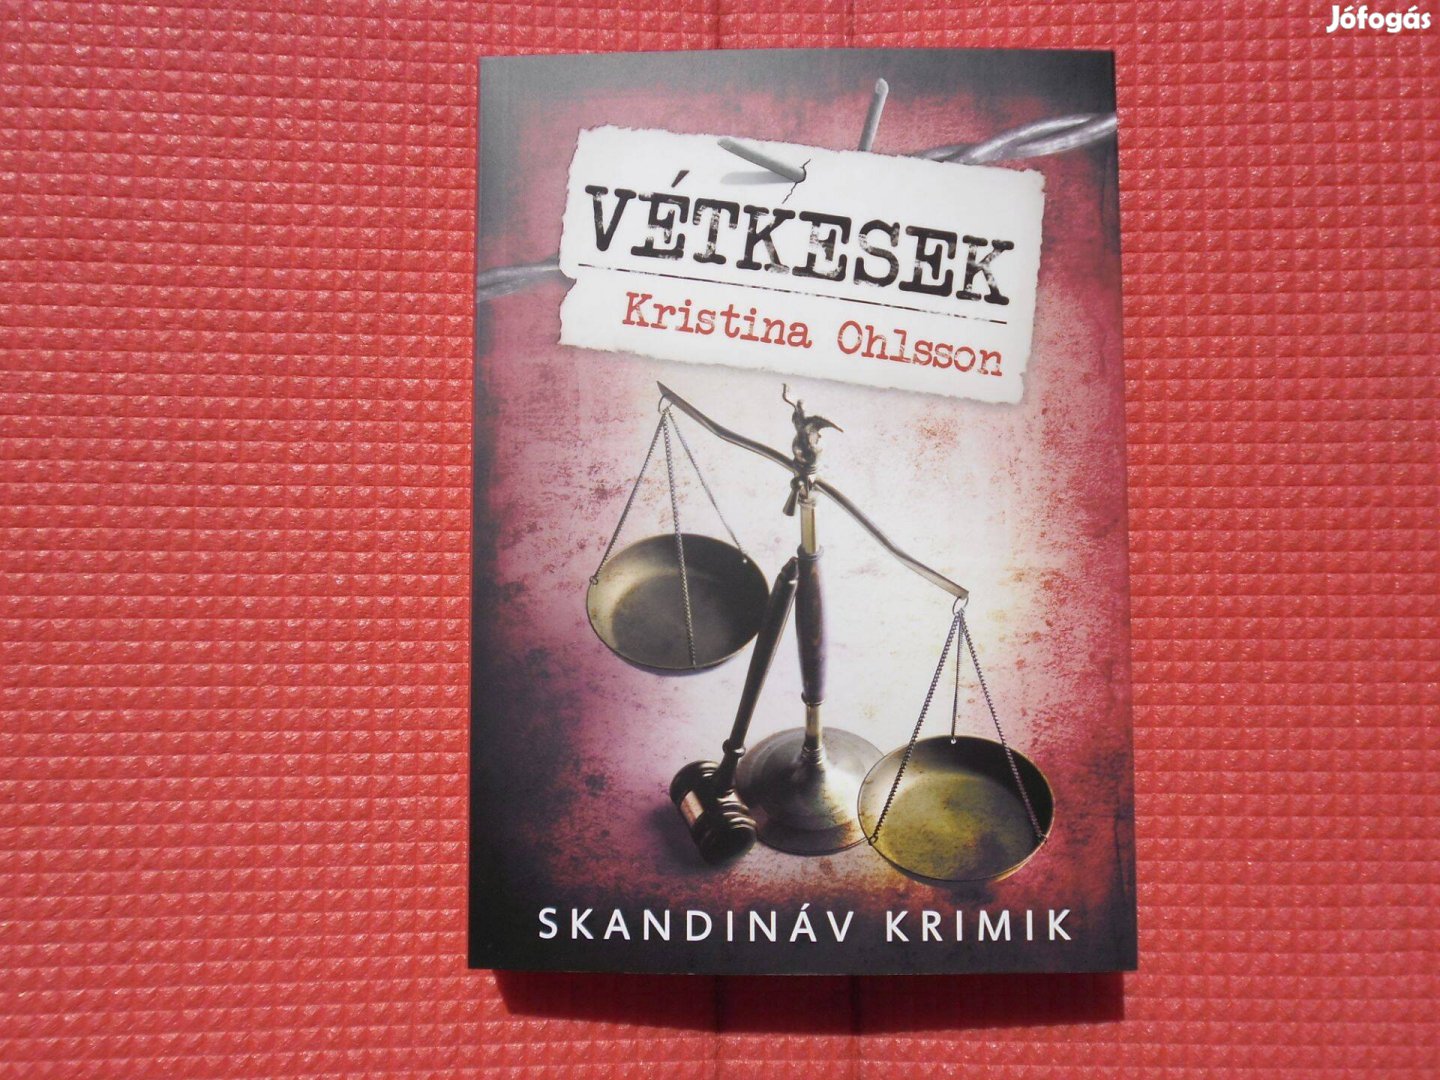 Kristina Ohlsson: Vétkesek /Skandináv krimik/